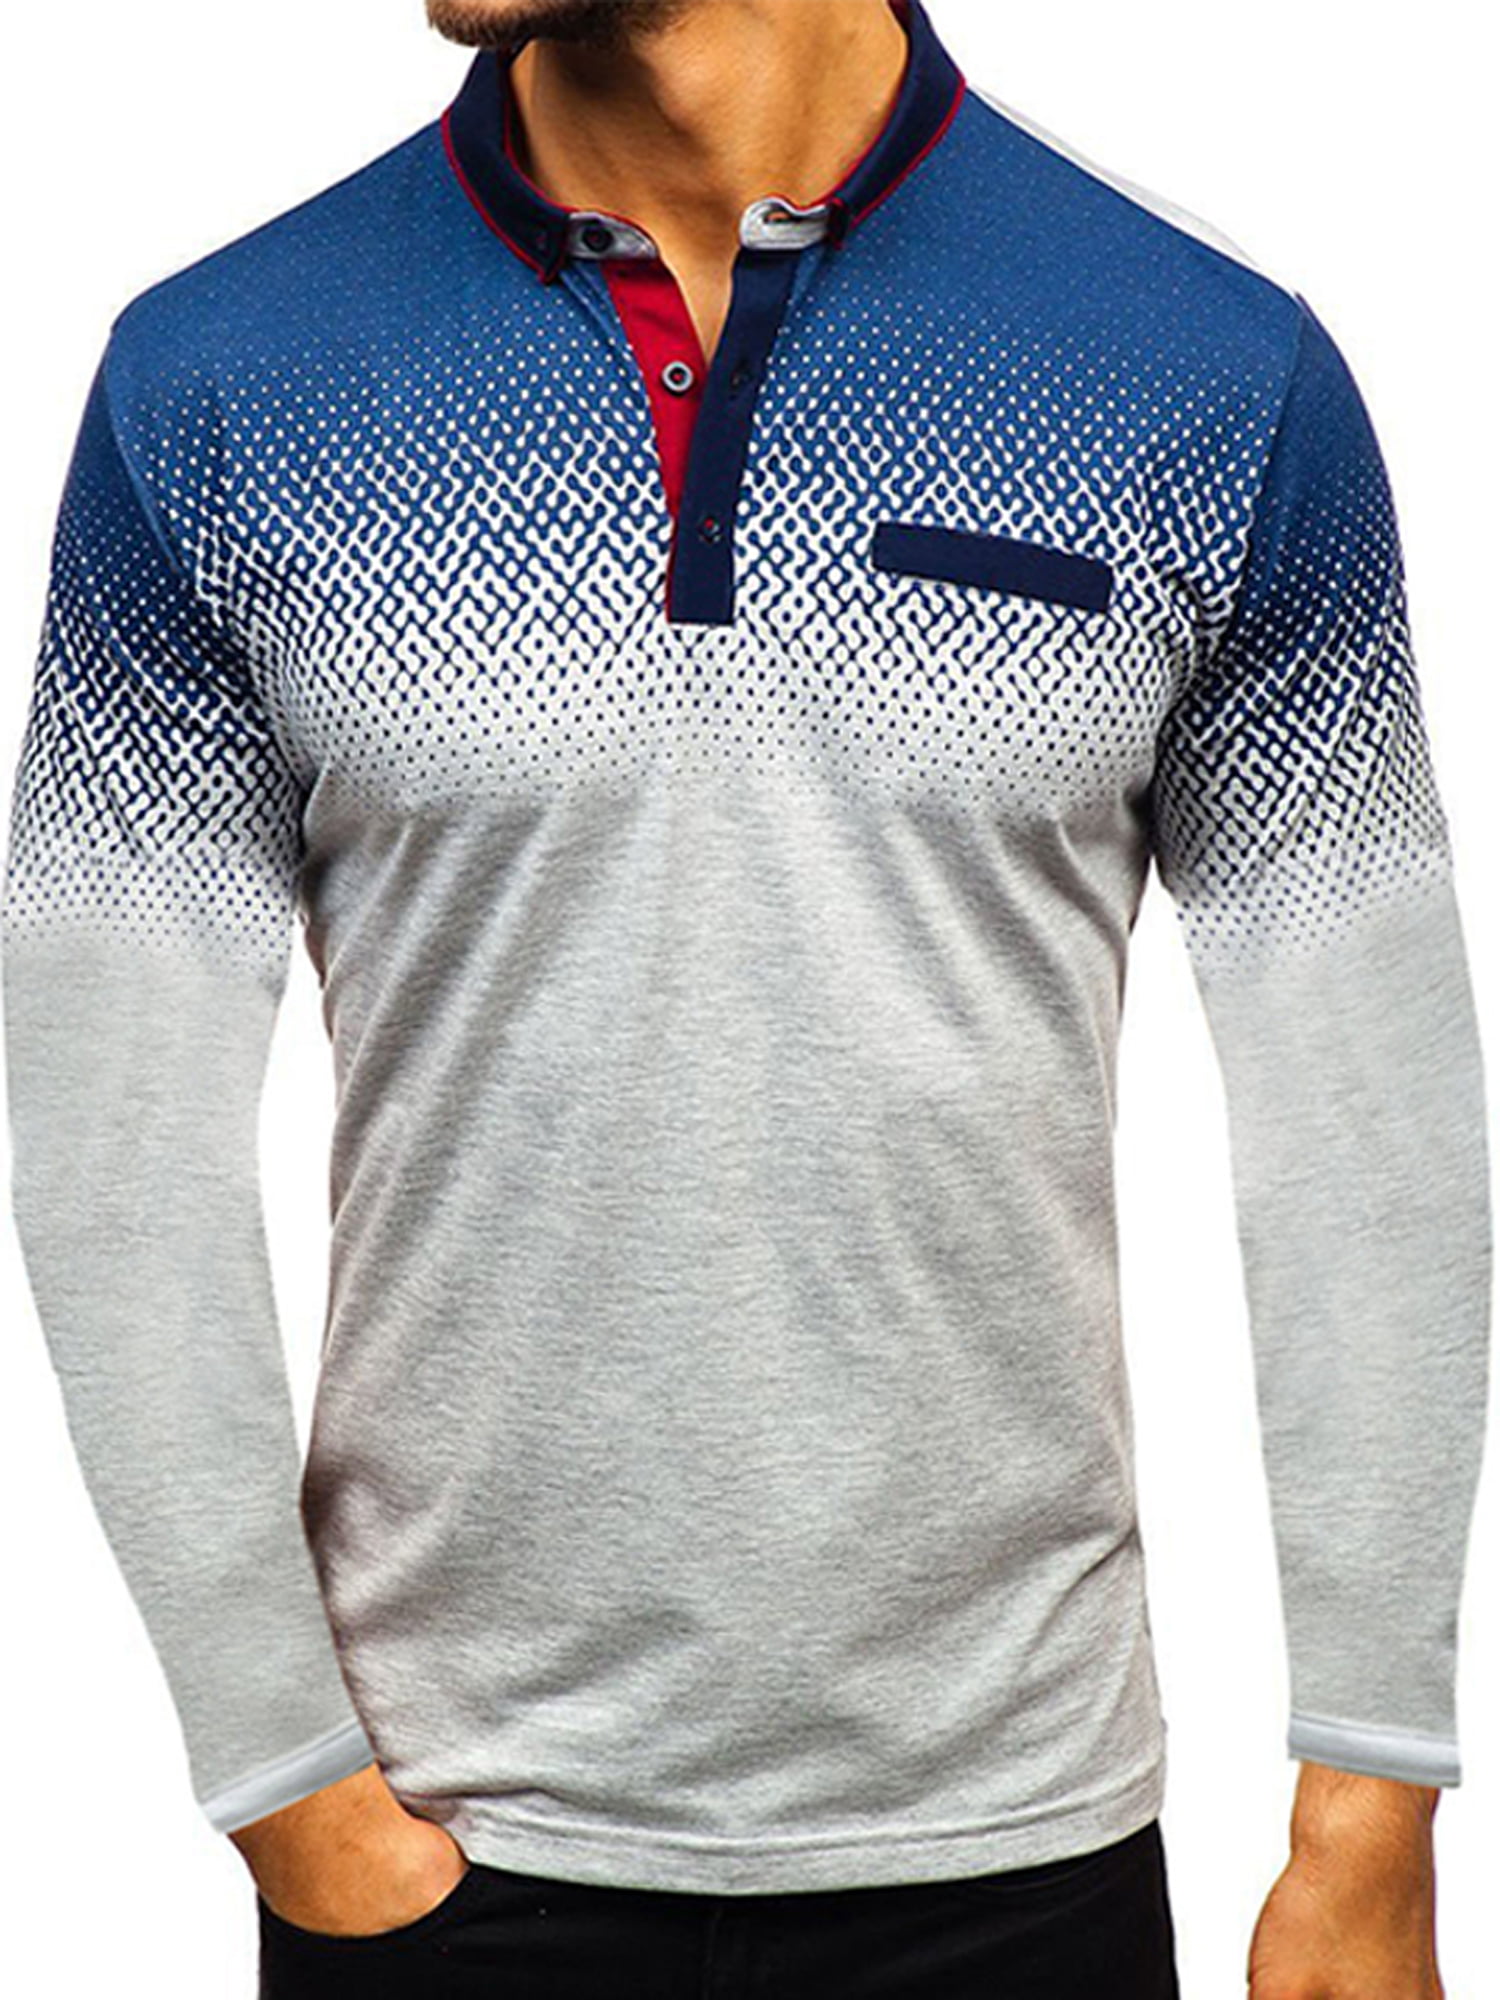 Lallc Men's Polo Shirt Golf Sports Long Sleeve T Shirt Jersey Casual